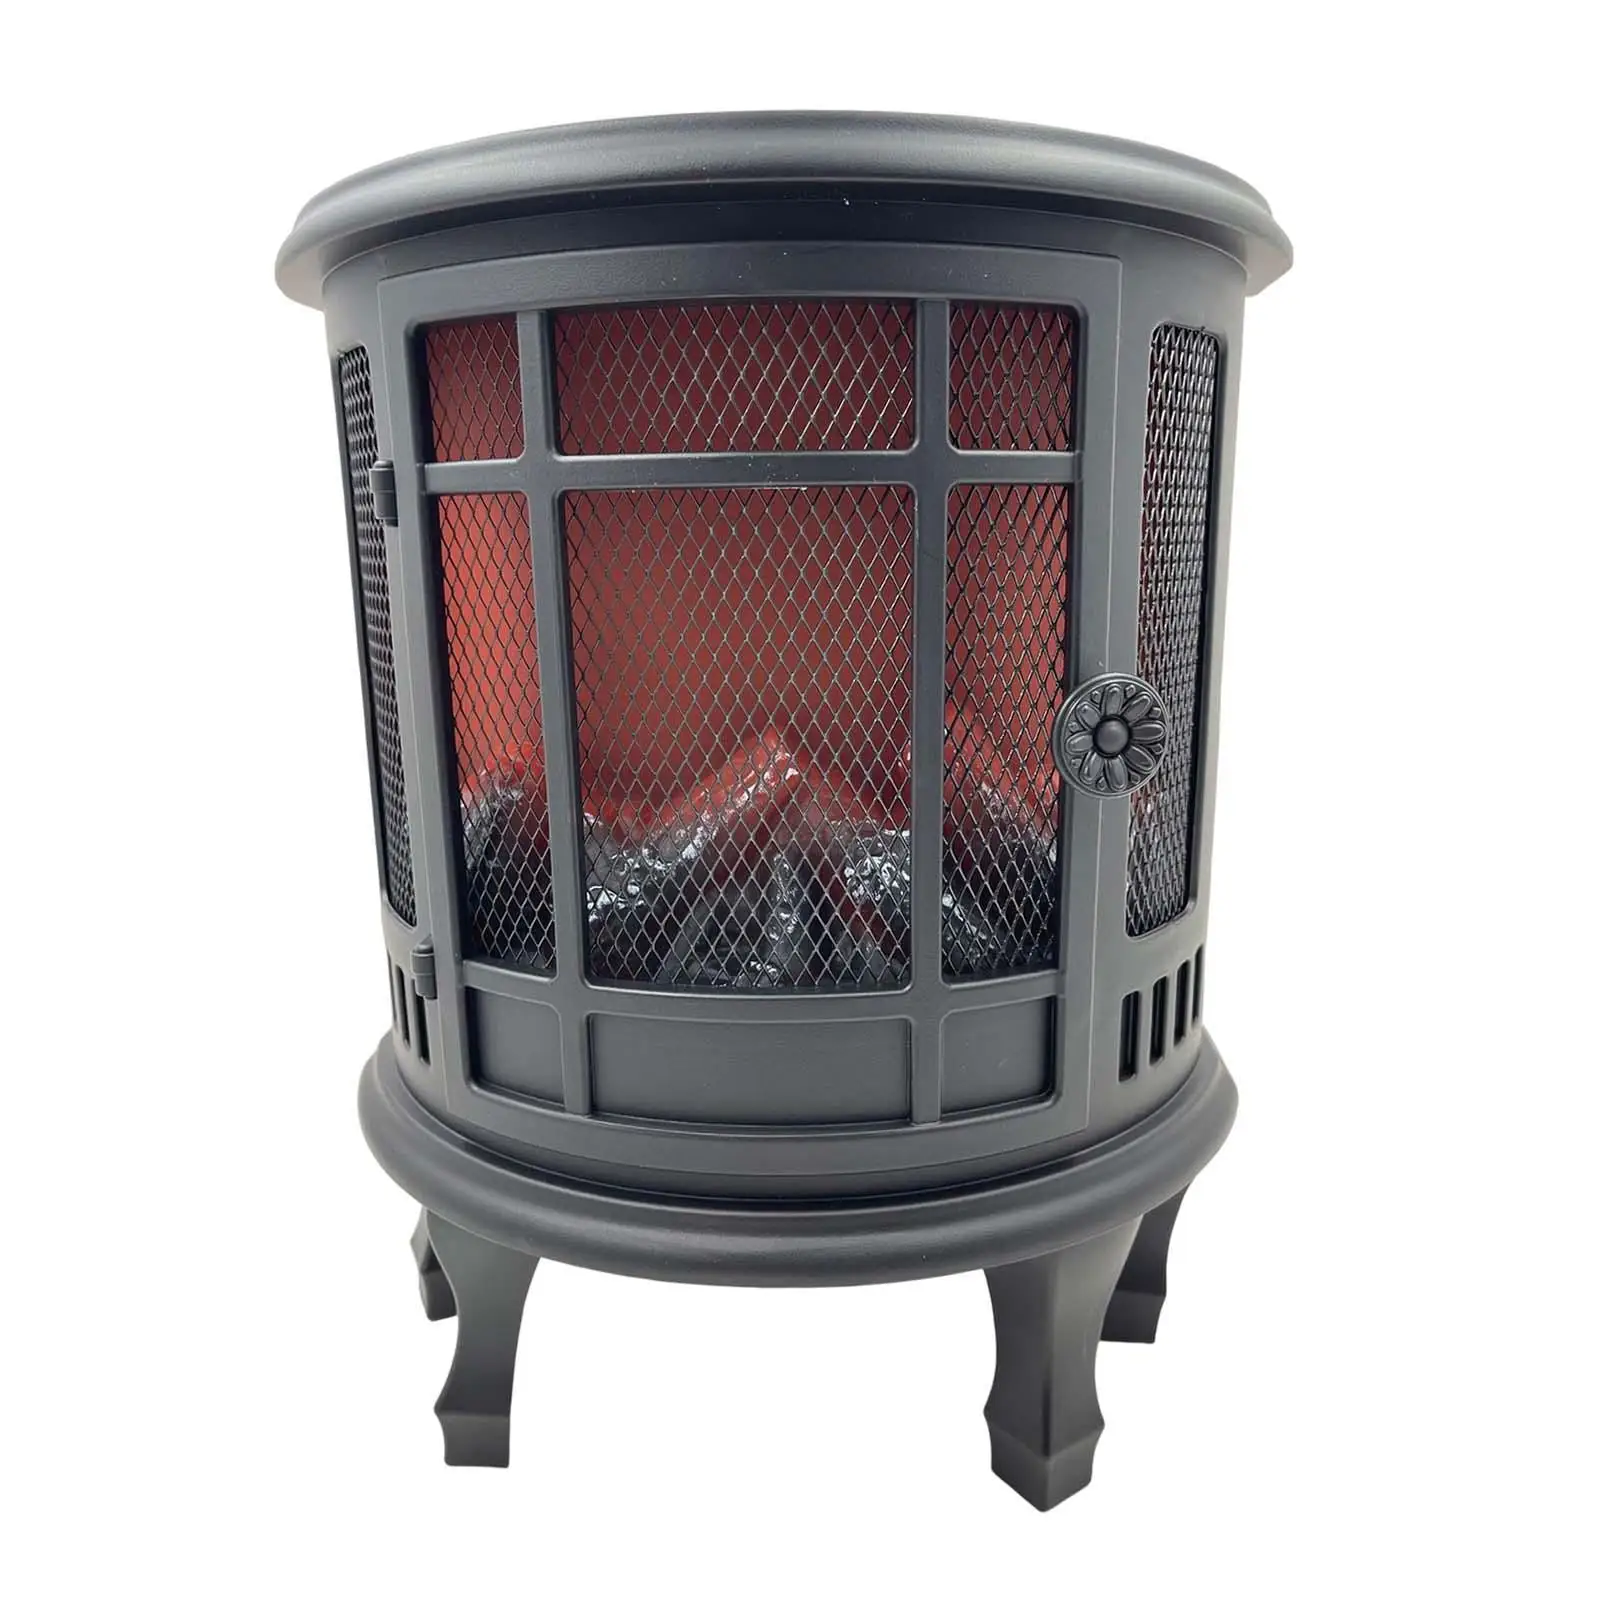 Simulation Fireplace Lanterns Night Lamp Home Decor Tabletop Decorative LED